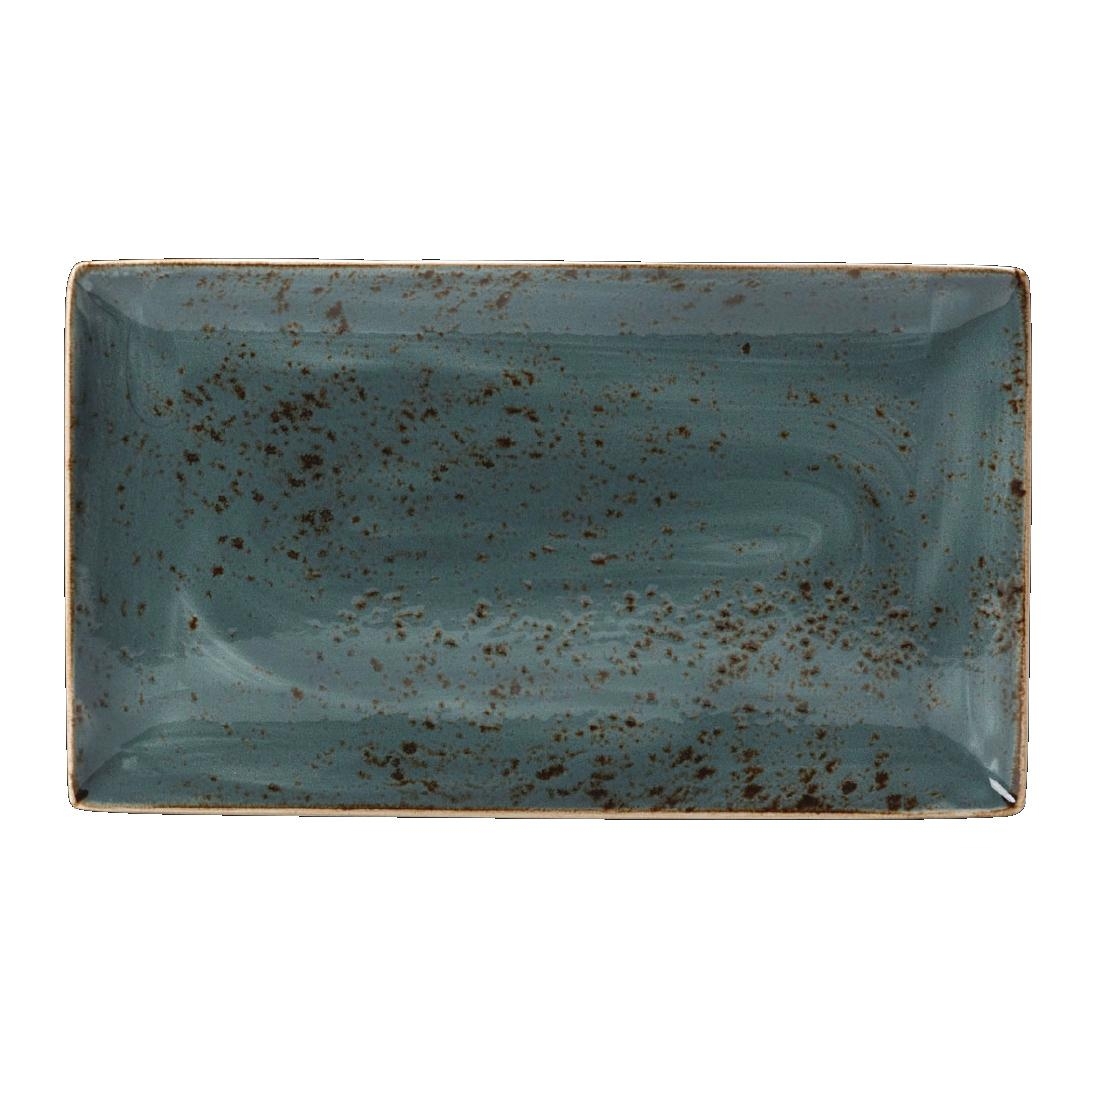 Steelite Craft Blue Rectangular Platters 330x 190mm